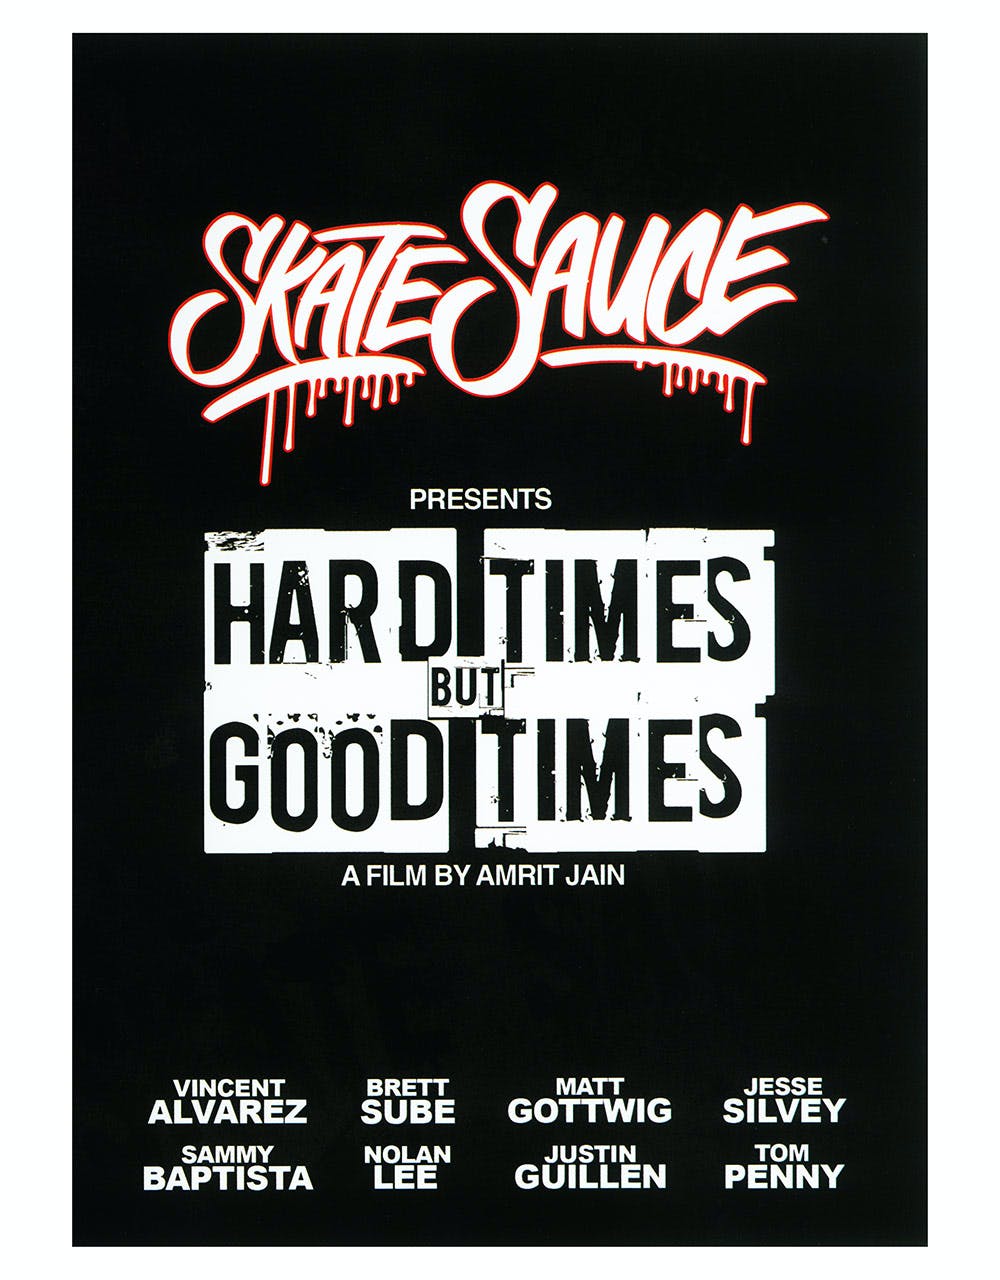 Skate Sauce Presents Hard Times But Good Times DVD